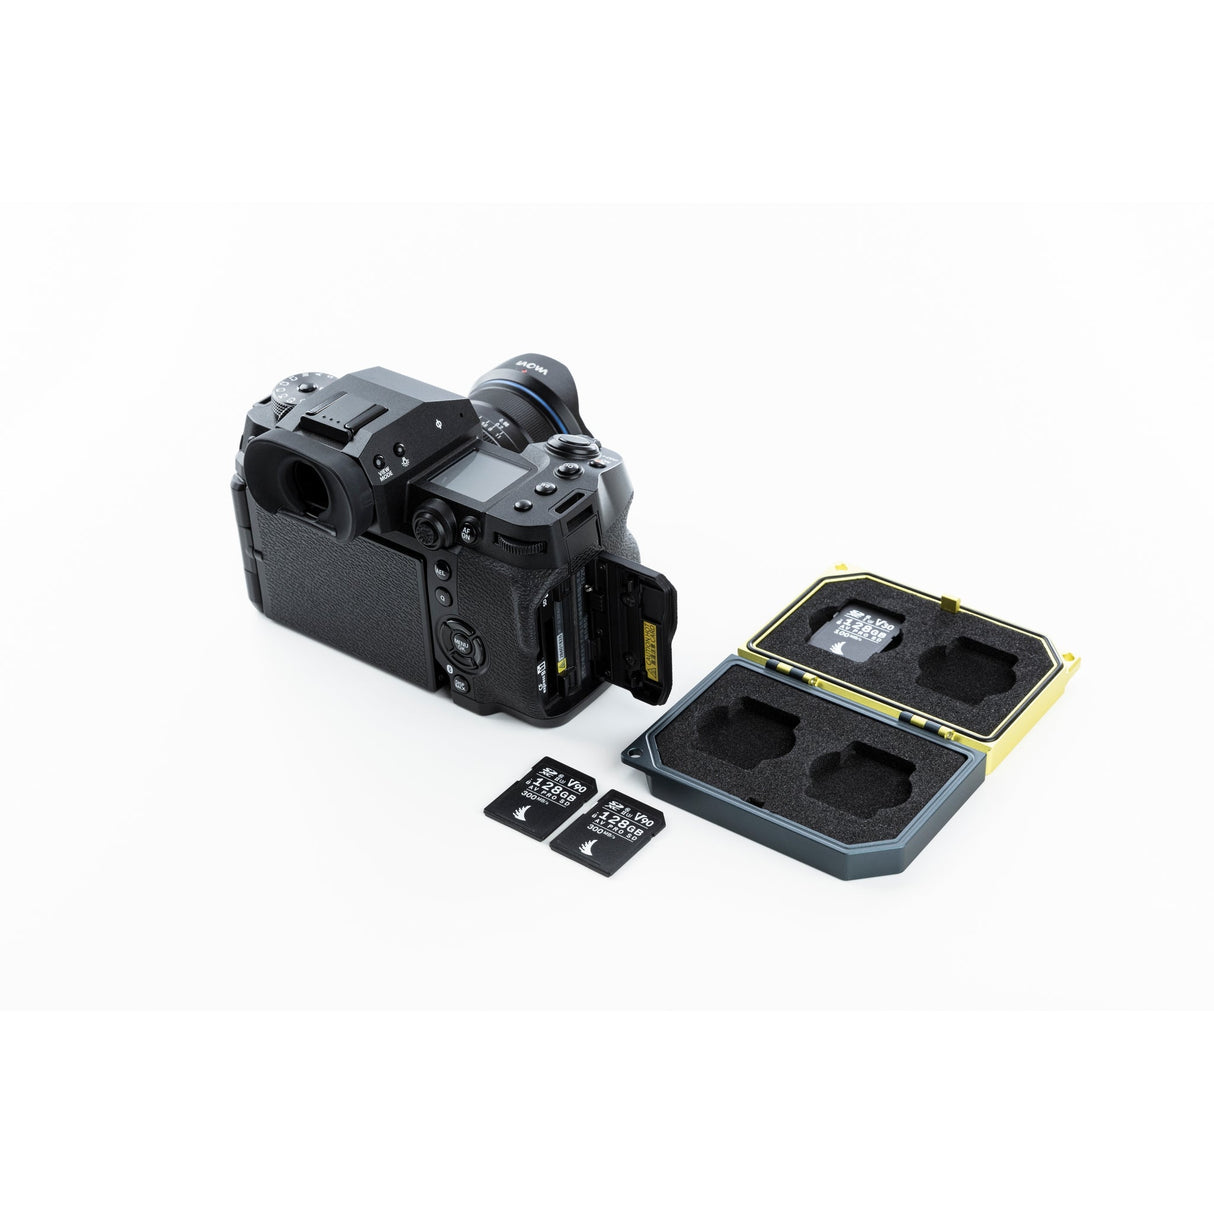 Angelbird AV PRO SD V90 MK2 Memory Card for Fujifilm, 128GB 2 Matched Pack